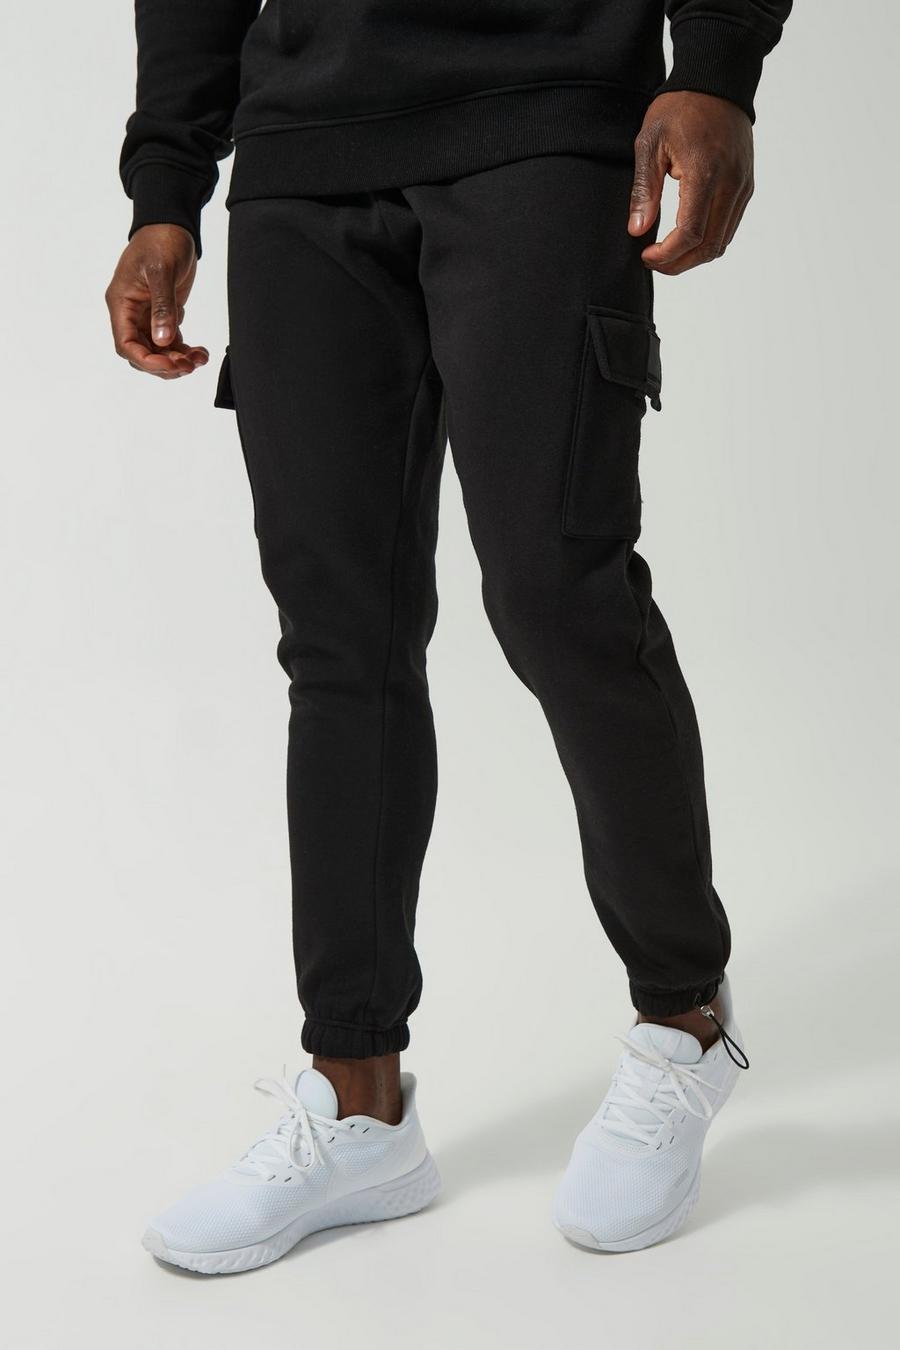 Pantaloni tuta Cargo Man Active Gym con polsini alle caviglie e fermacorde, Black negro